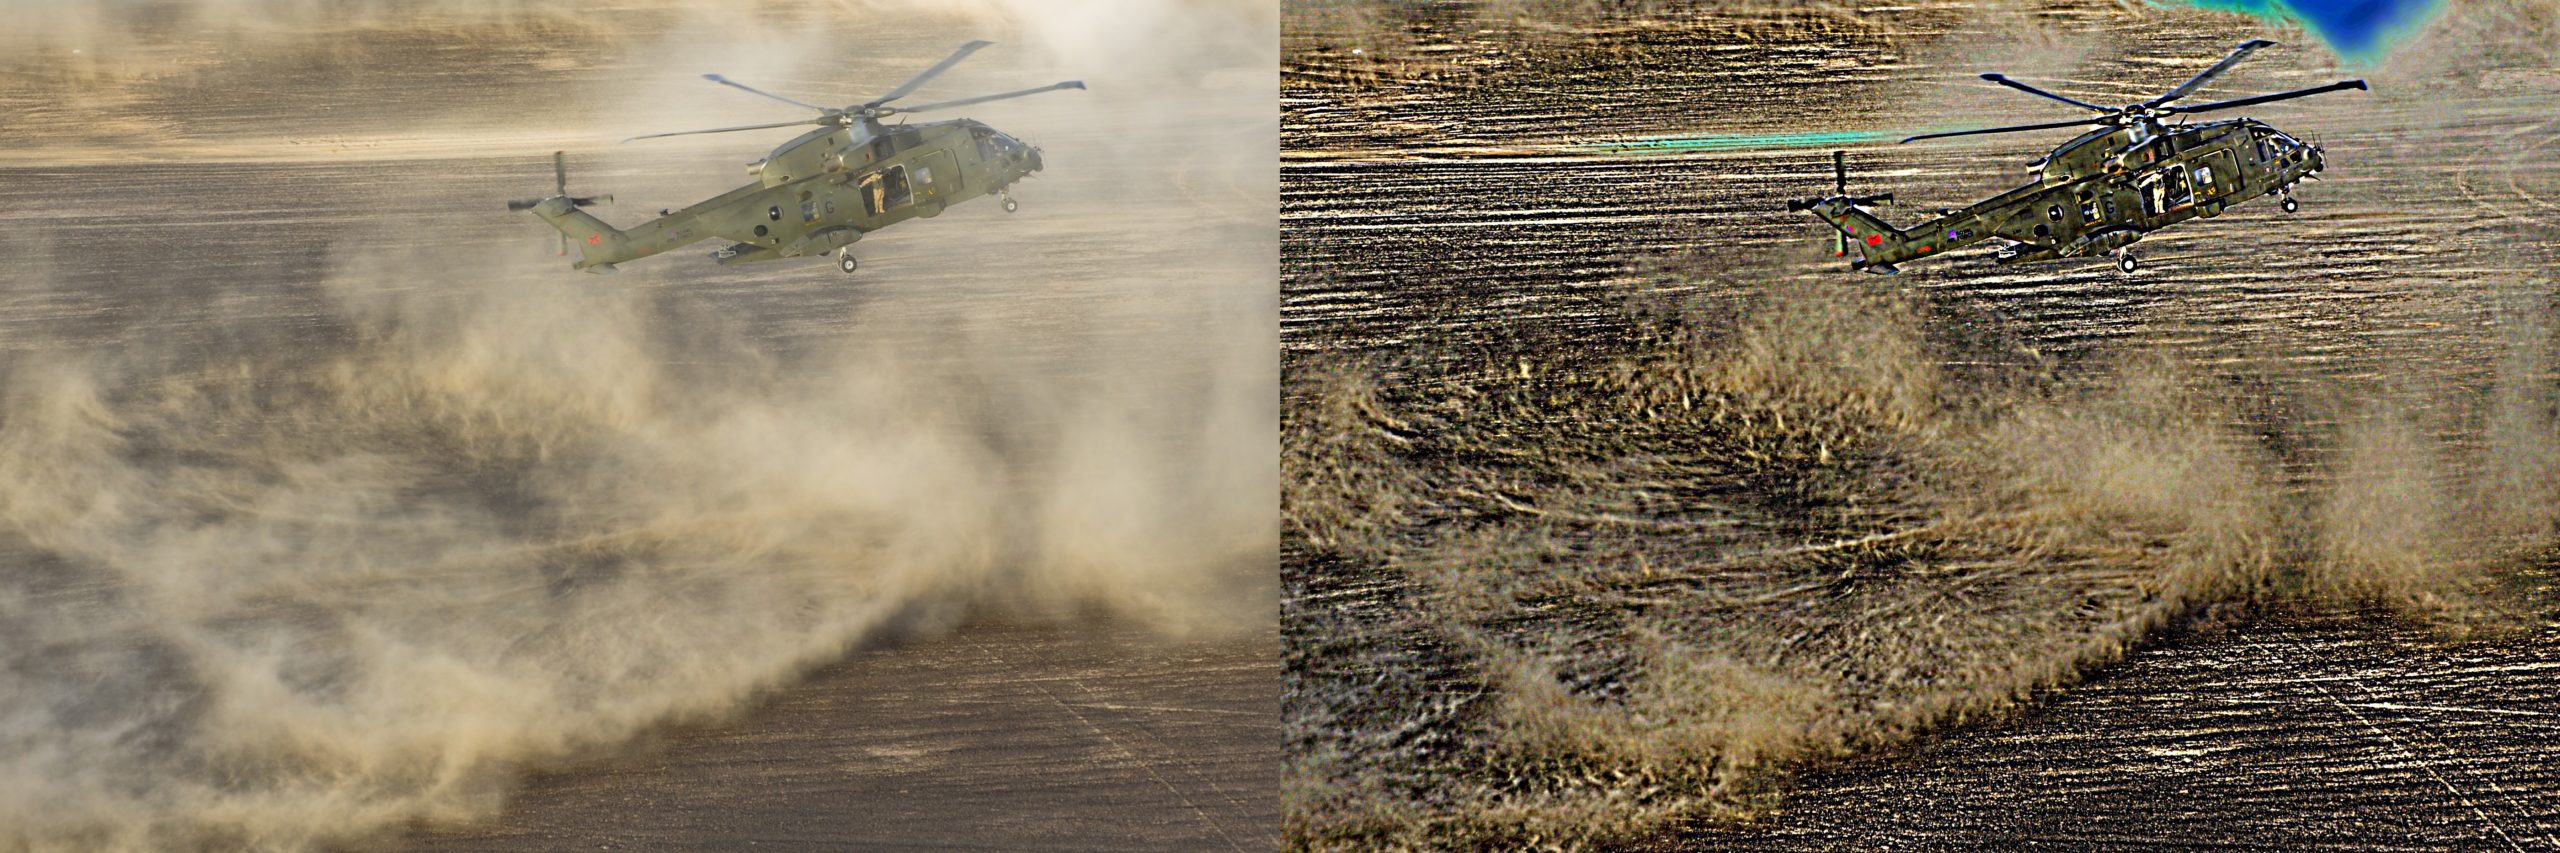 ERV scan of RAF_Merlin_Helicopters_During_Exercise_Desert_Vortex_MOD_45151773